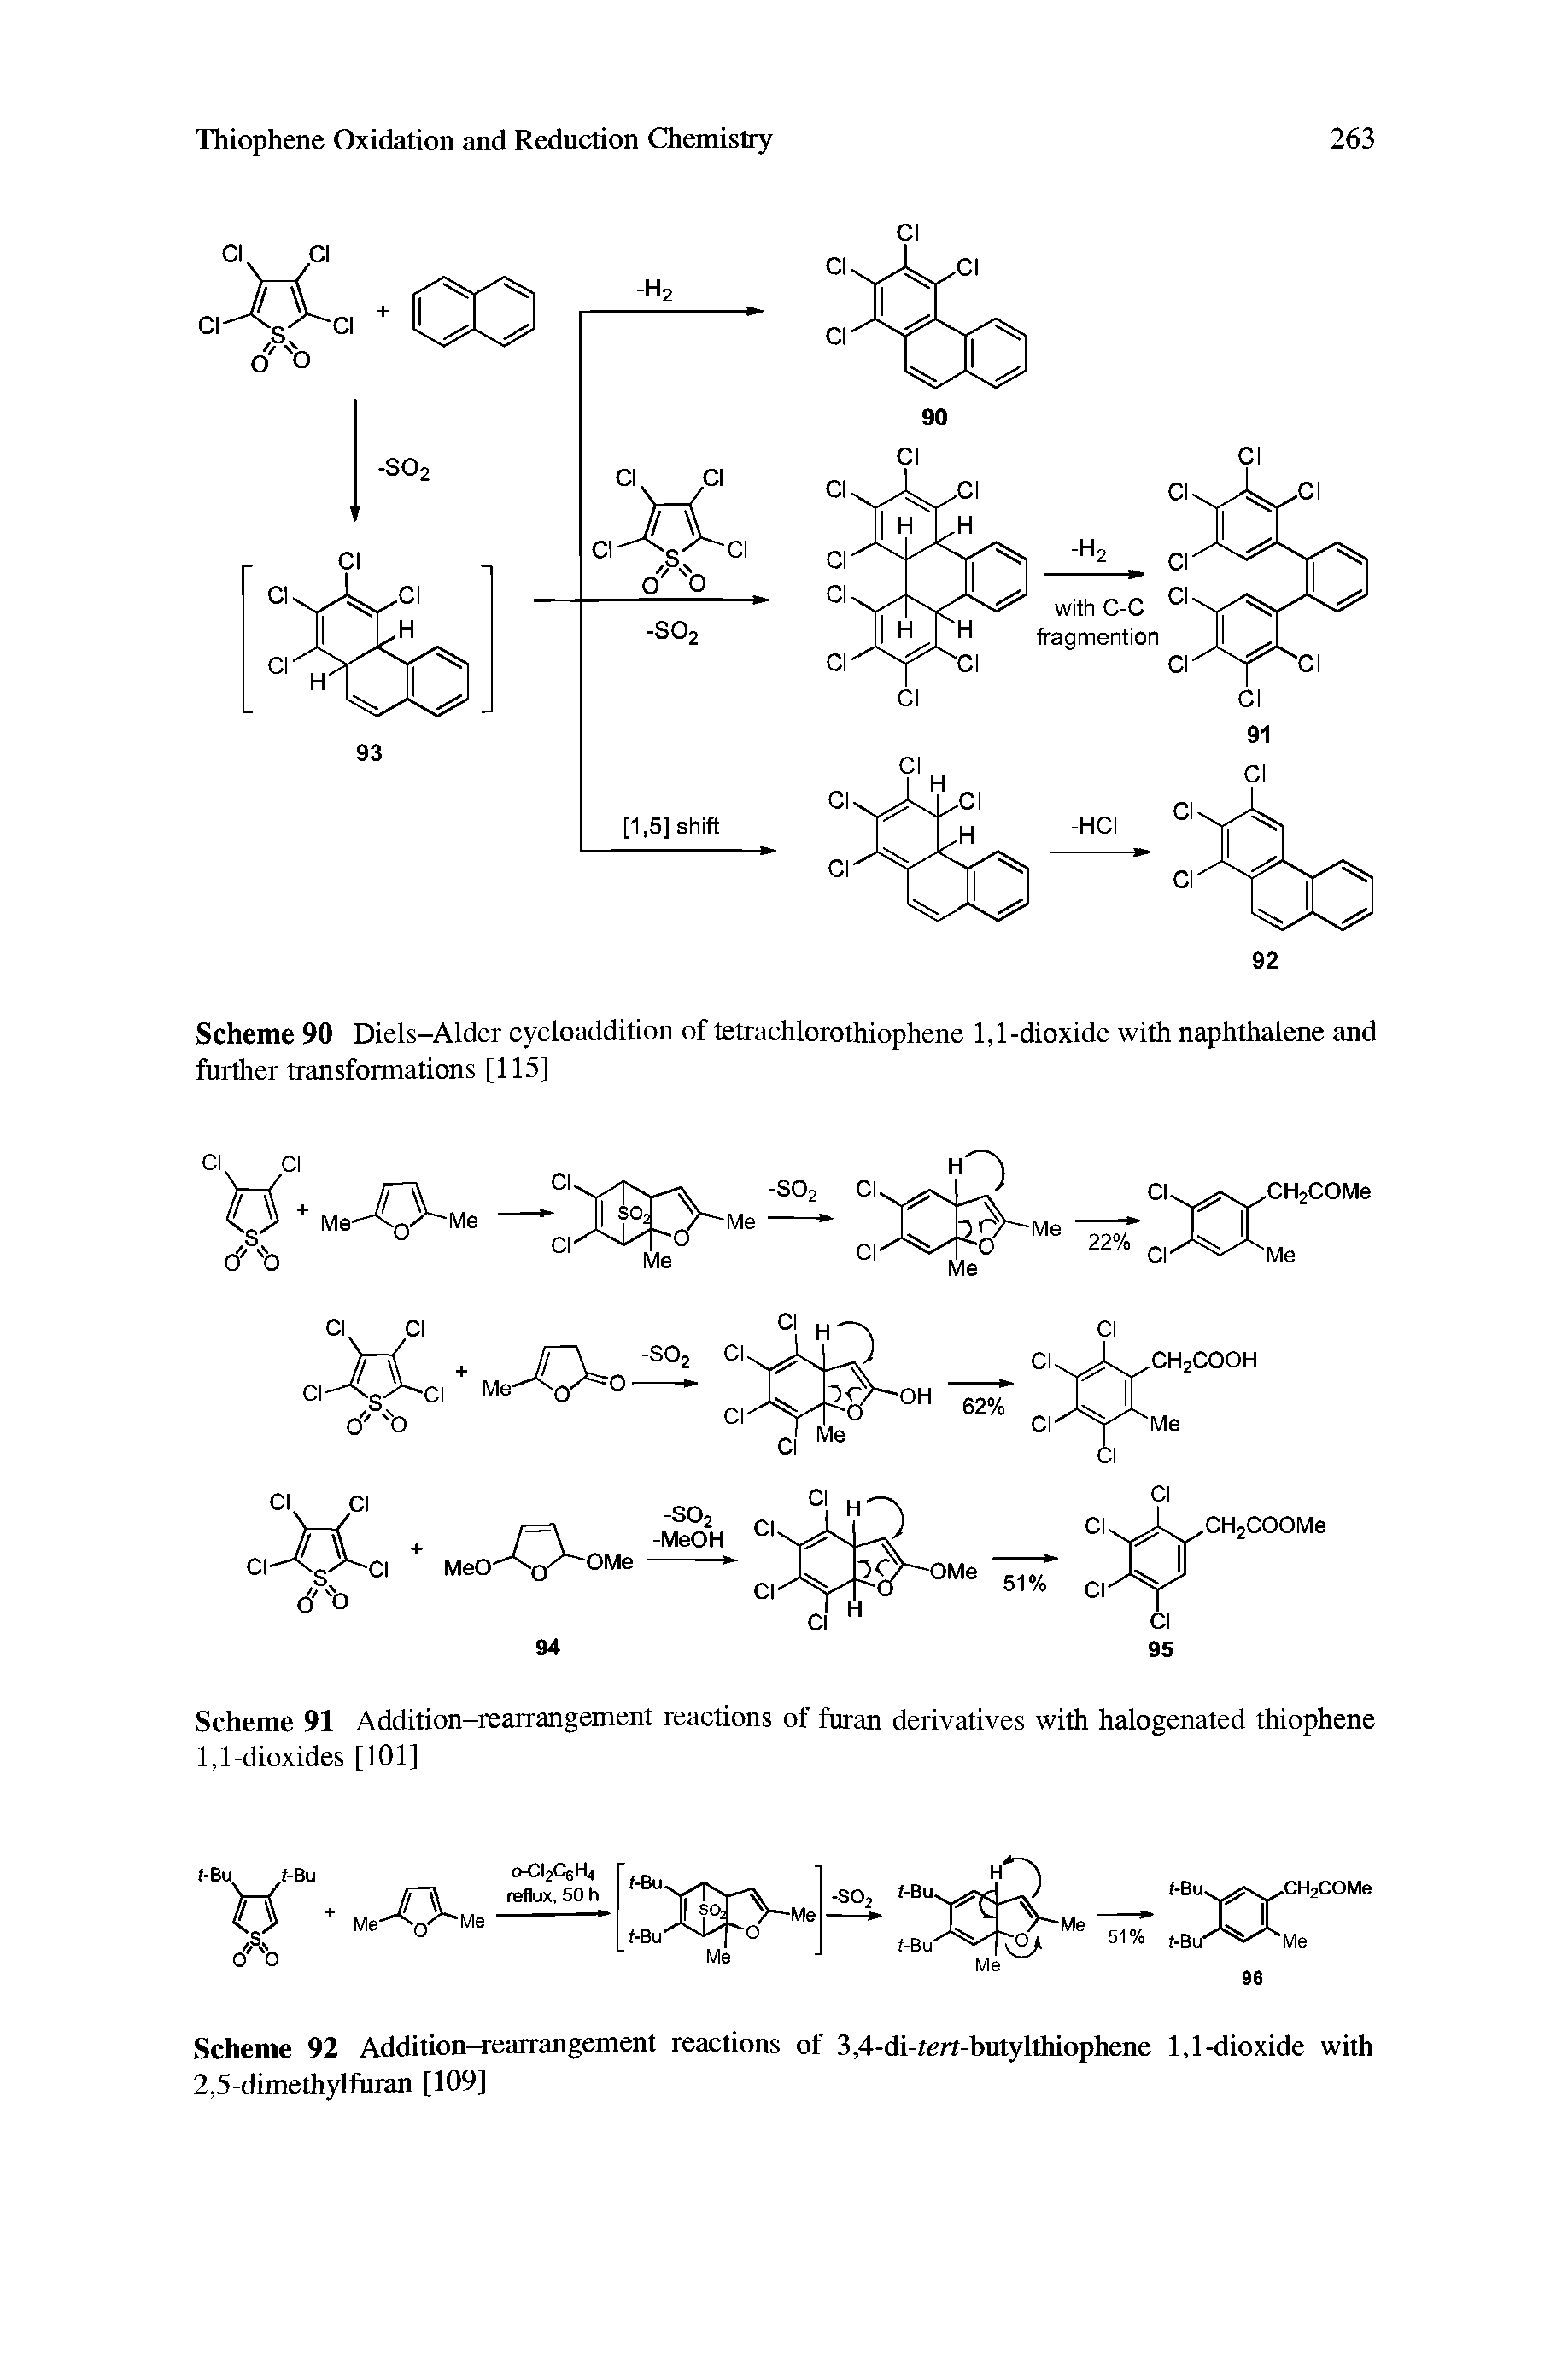 Scheme 91 Addition-rearrangement reactions of furan derivatives with halogenated thiophene 1,1-dioxides [101]...